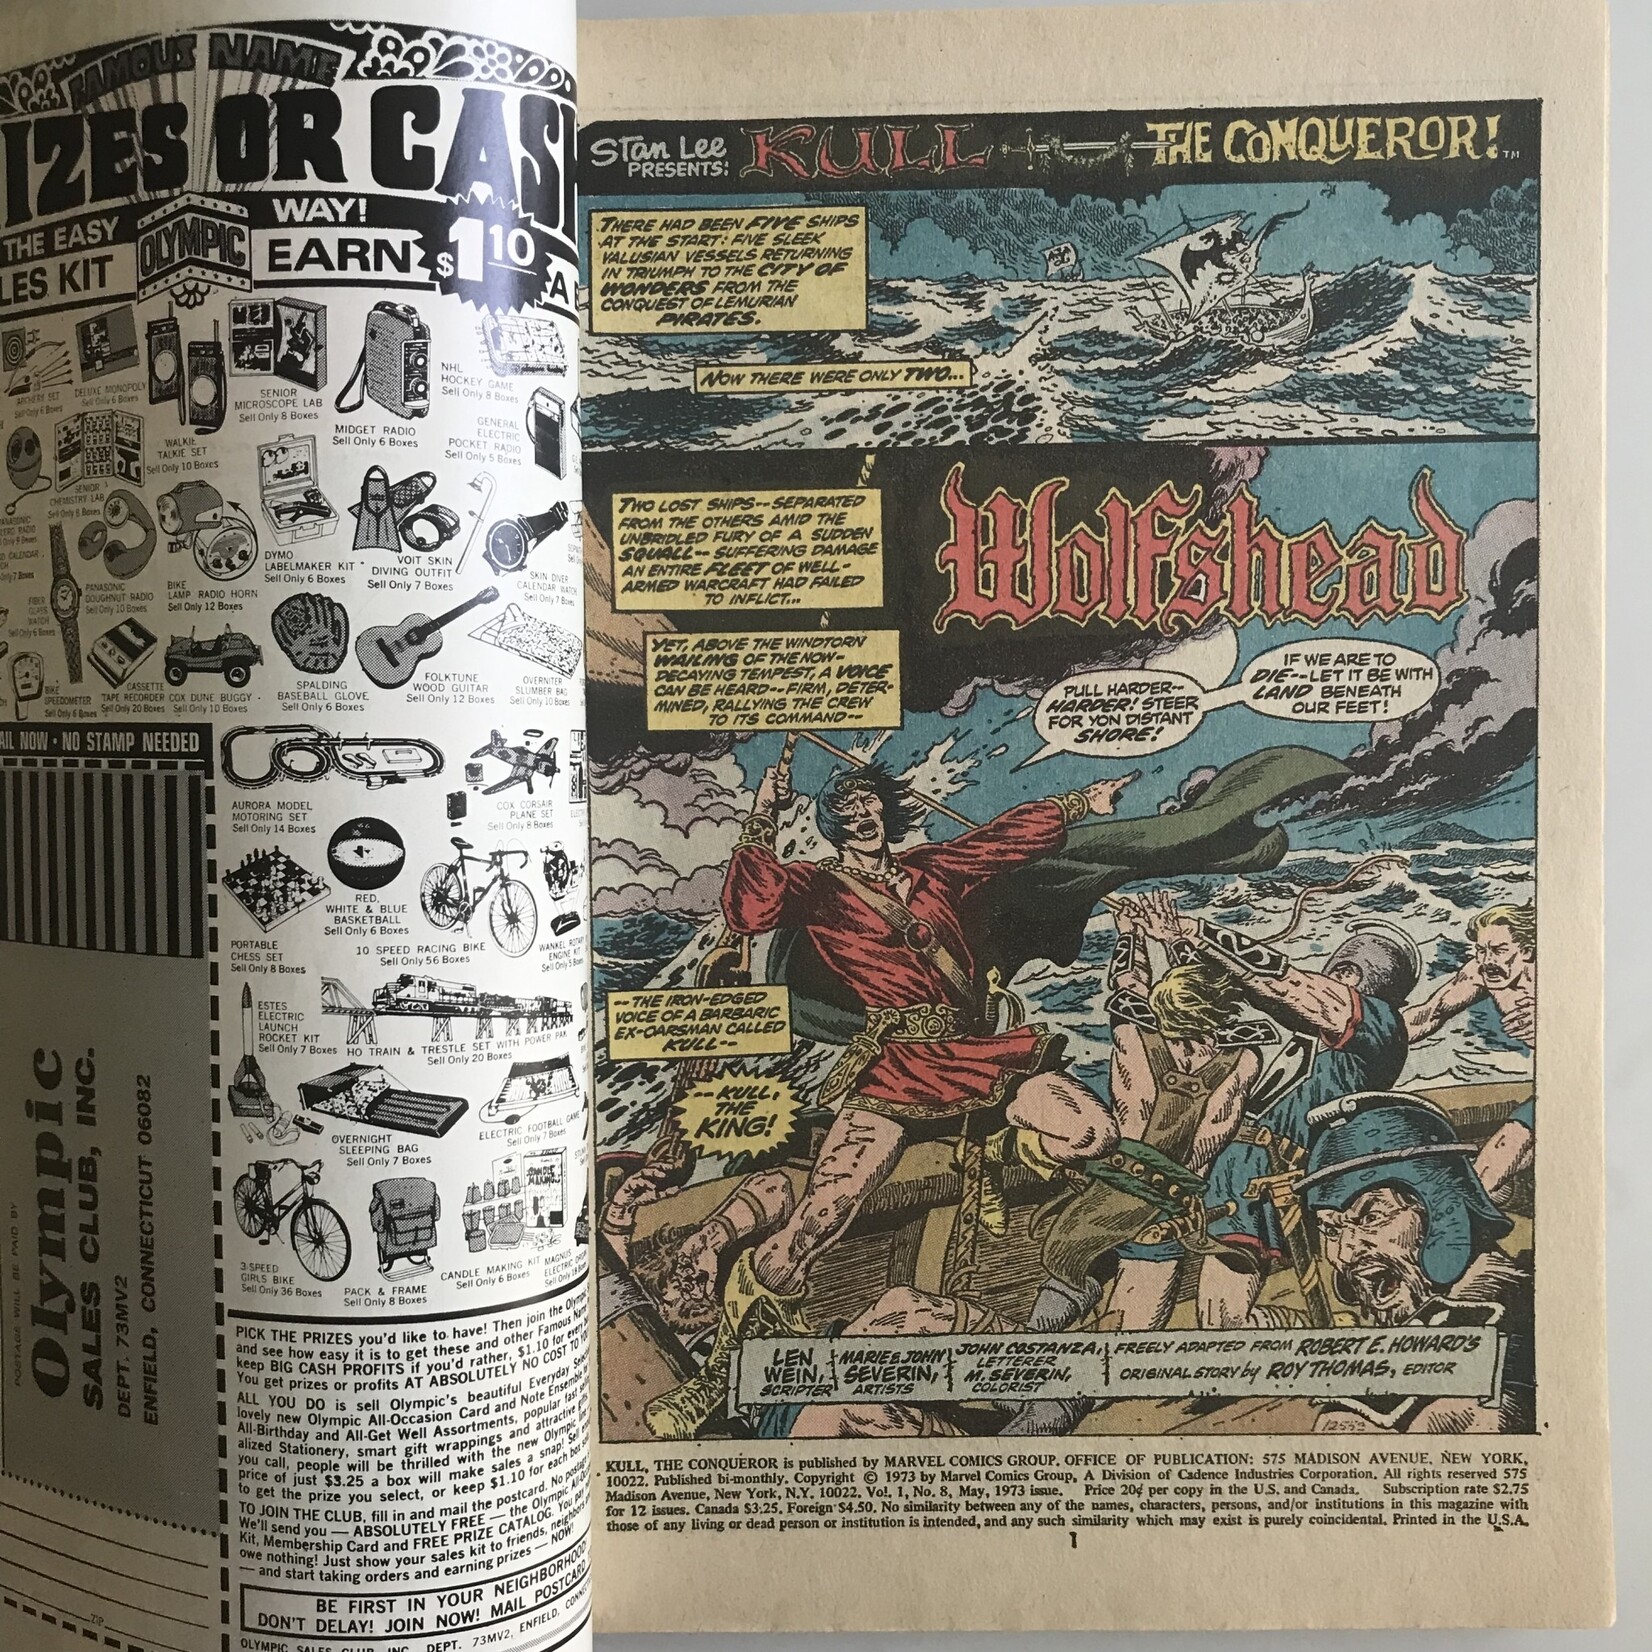 Kull The Conqueror - Vol. 1 #08 May 1973 - Comic Book